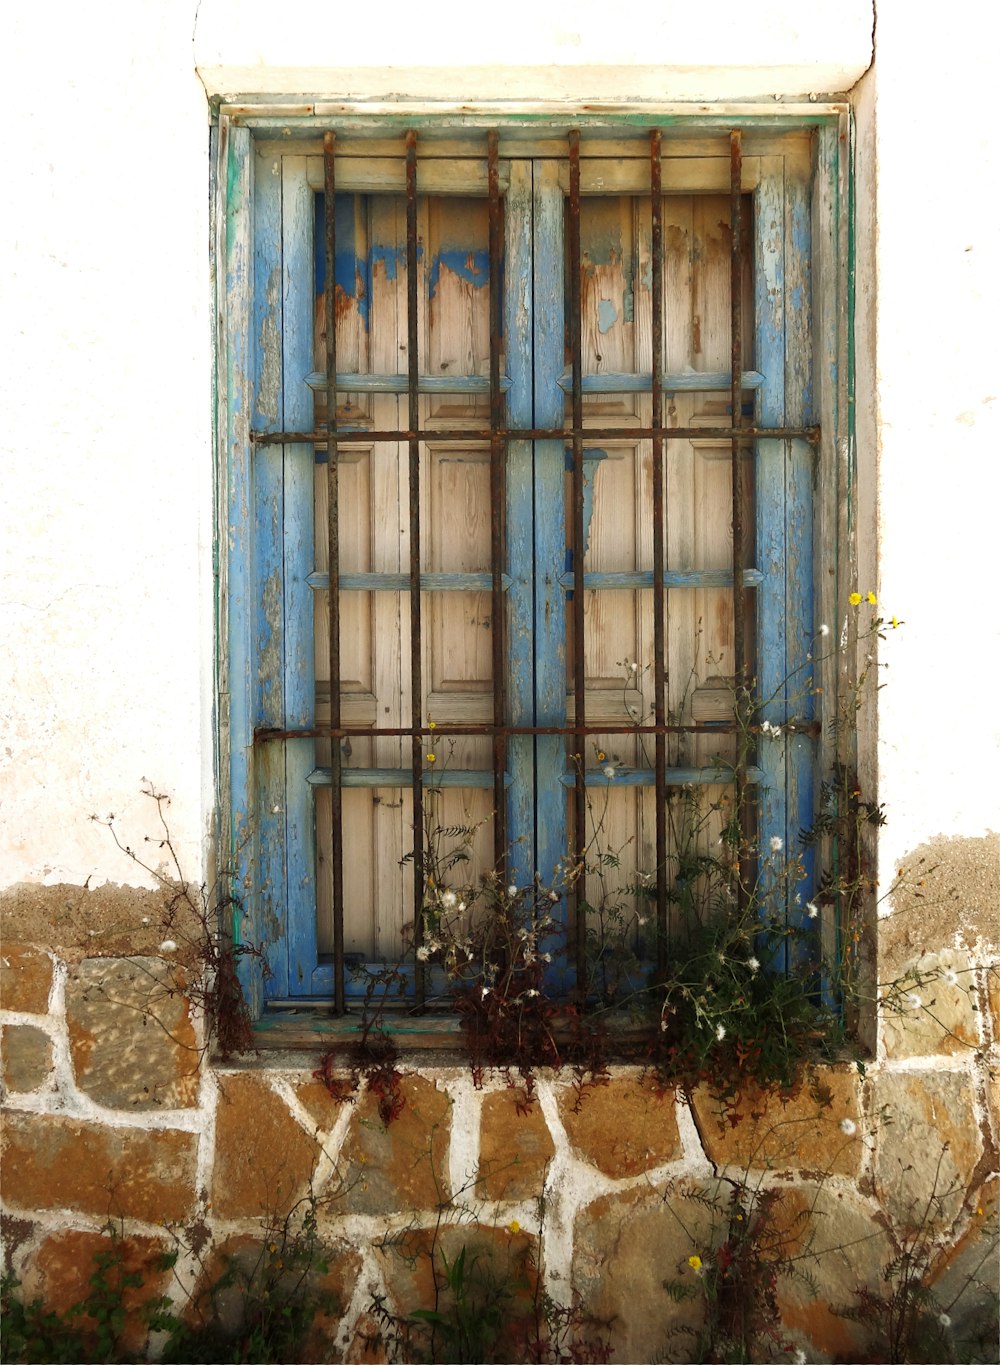 a window with a blue frame on a stone wall